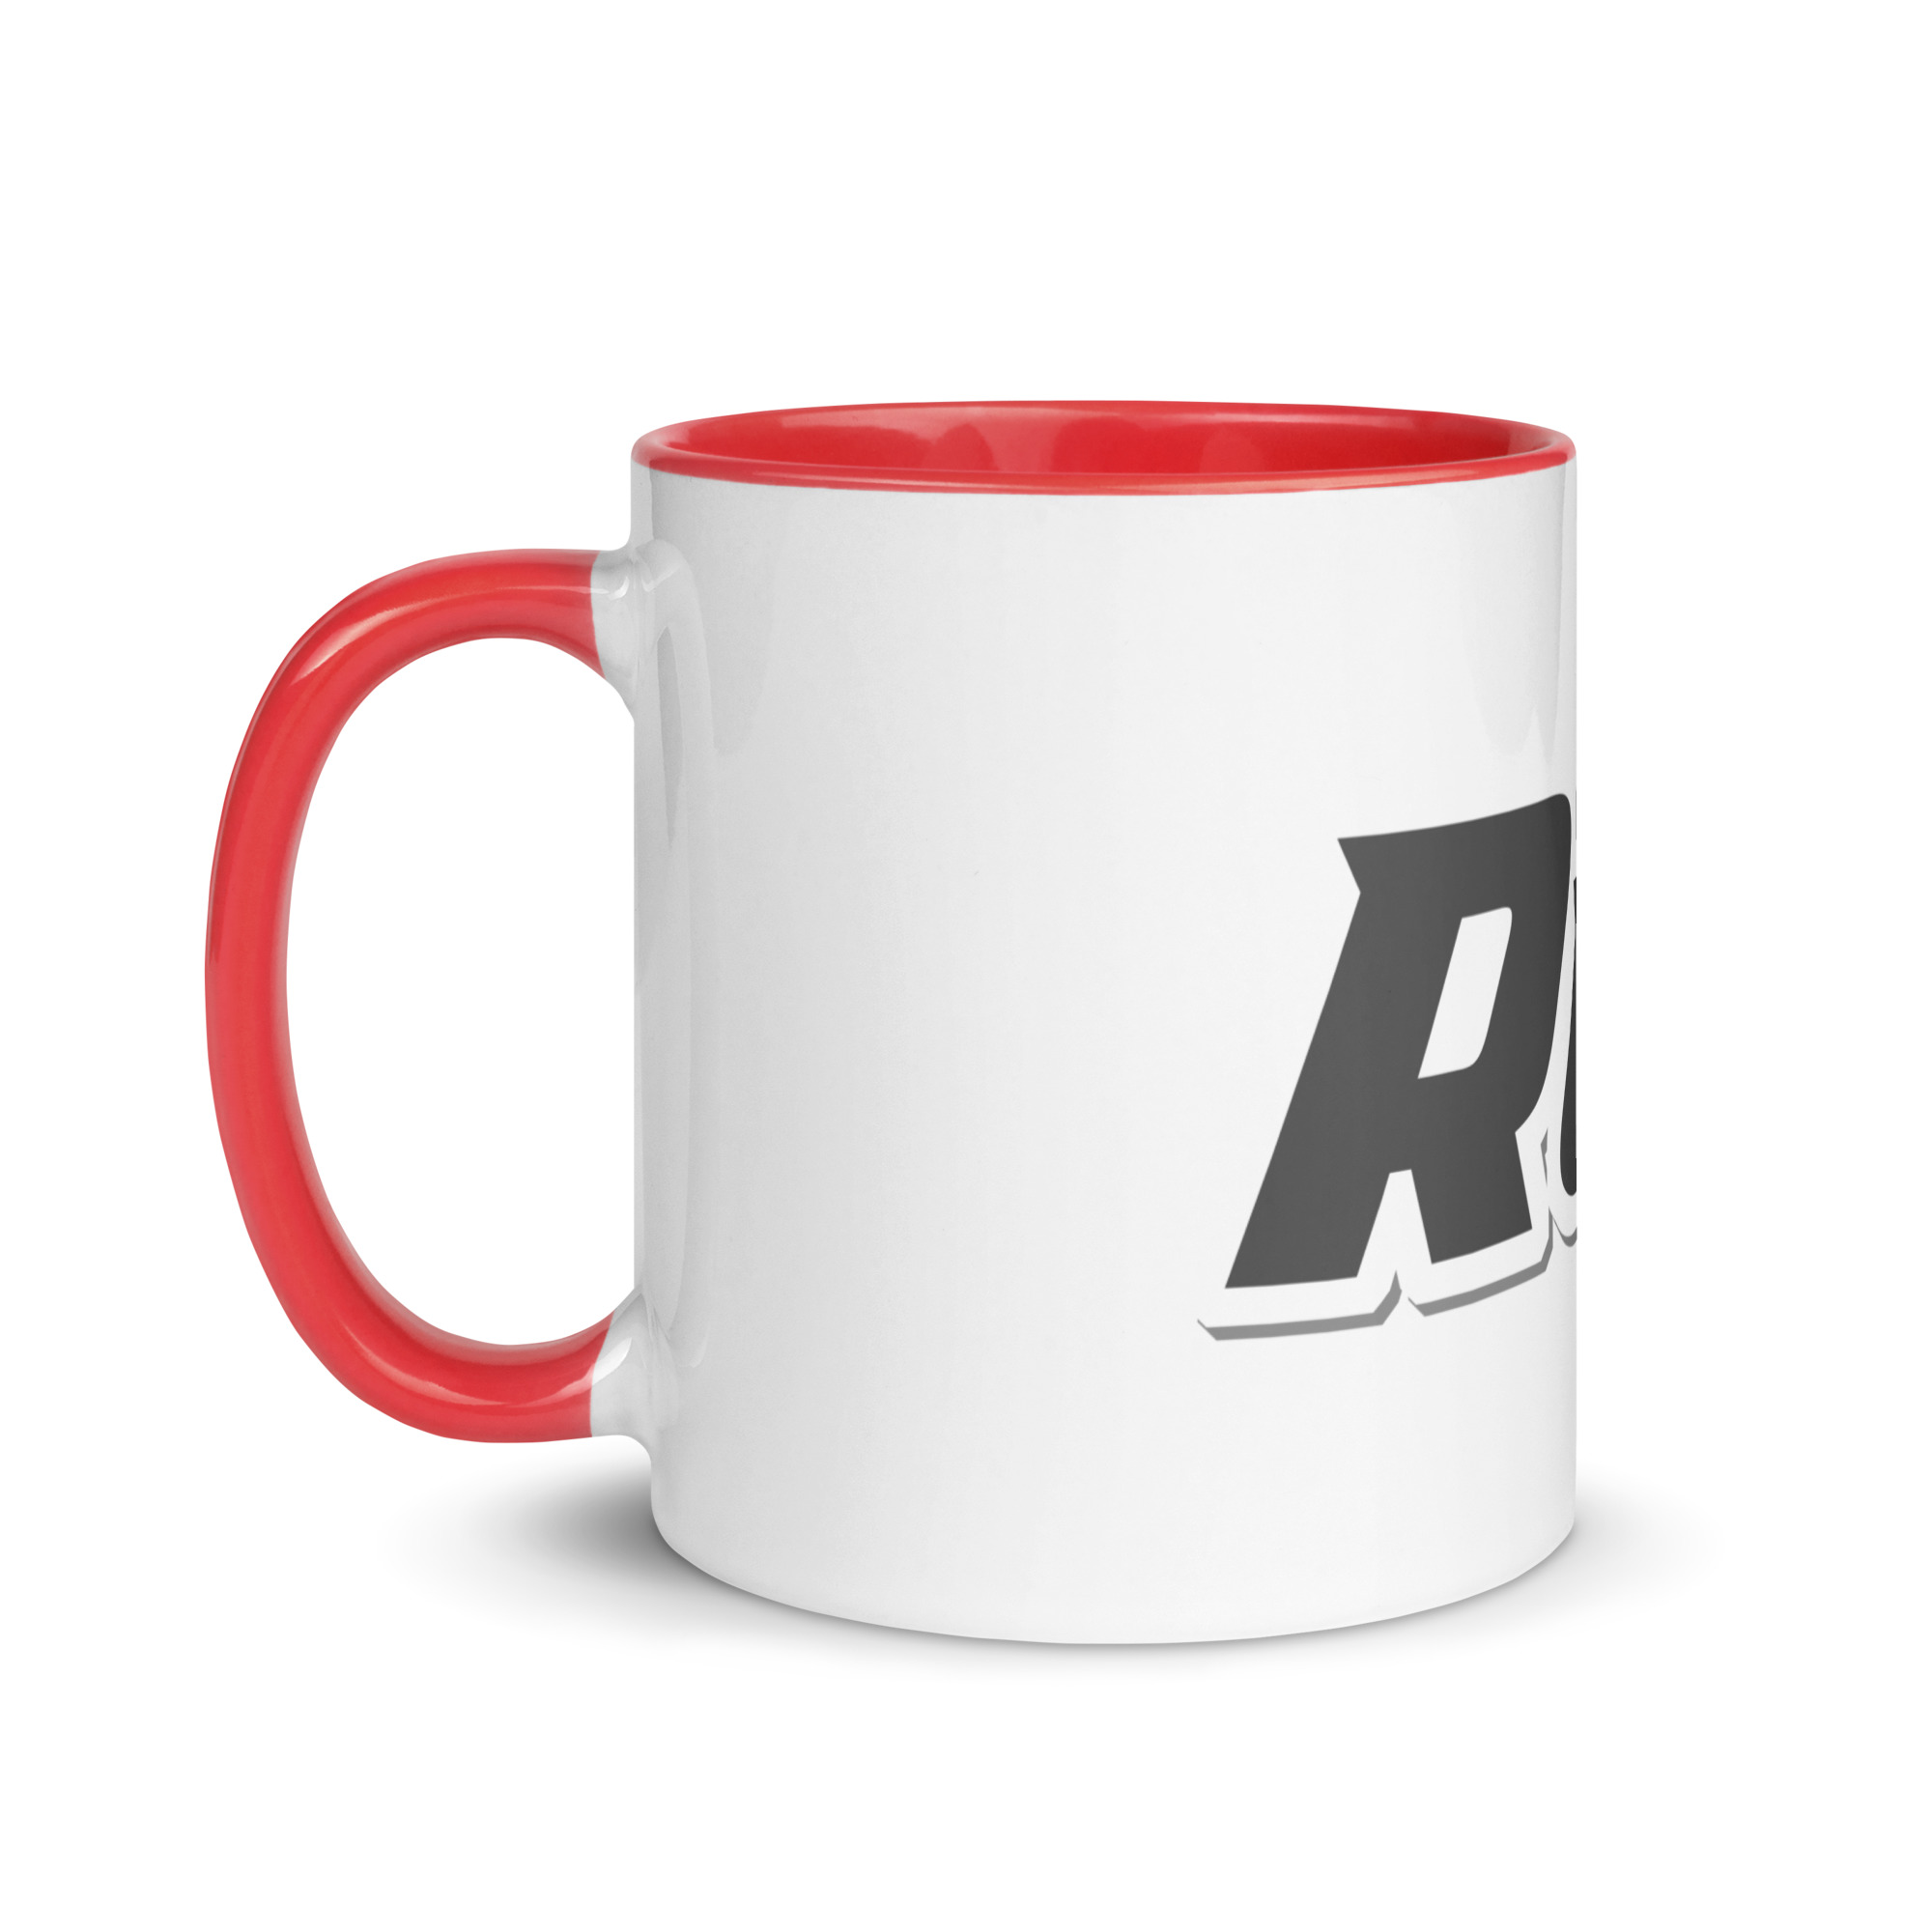 white-ceramic-mug-with-color-inside-red-11-oz-left-6525b50608b74.jpg